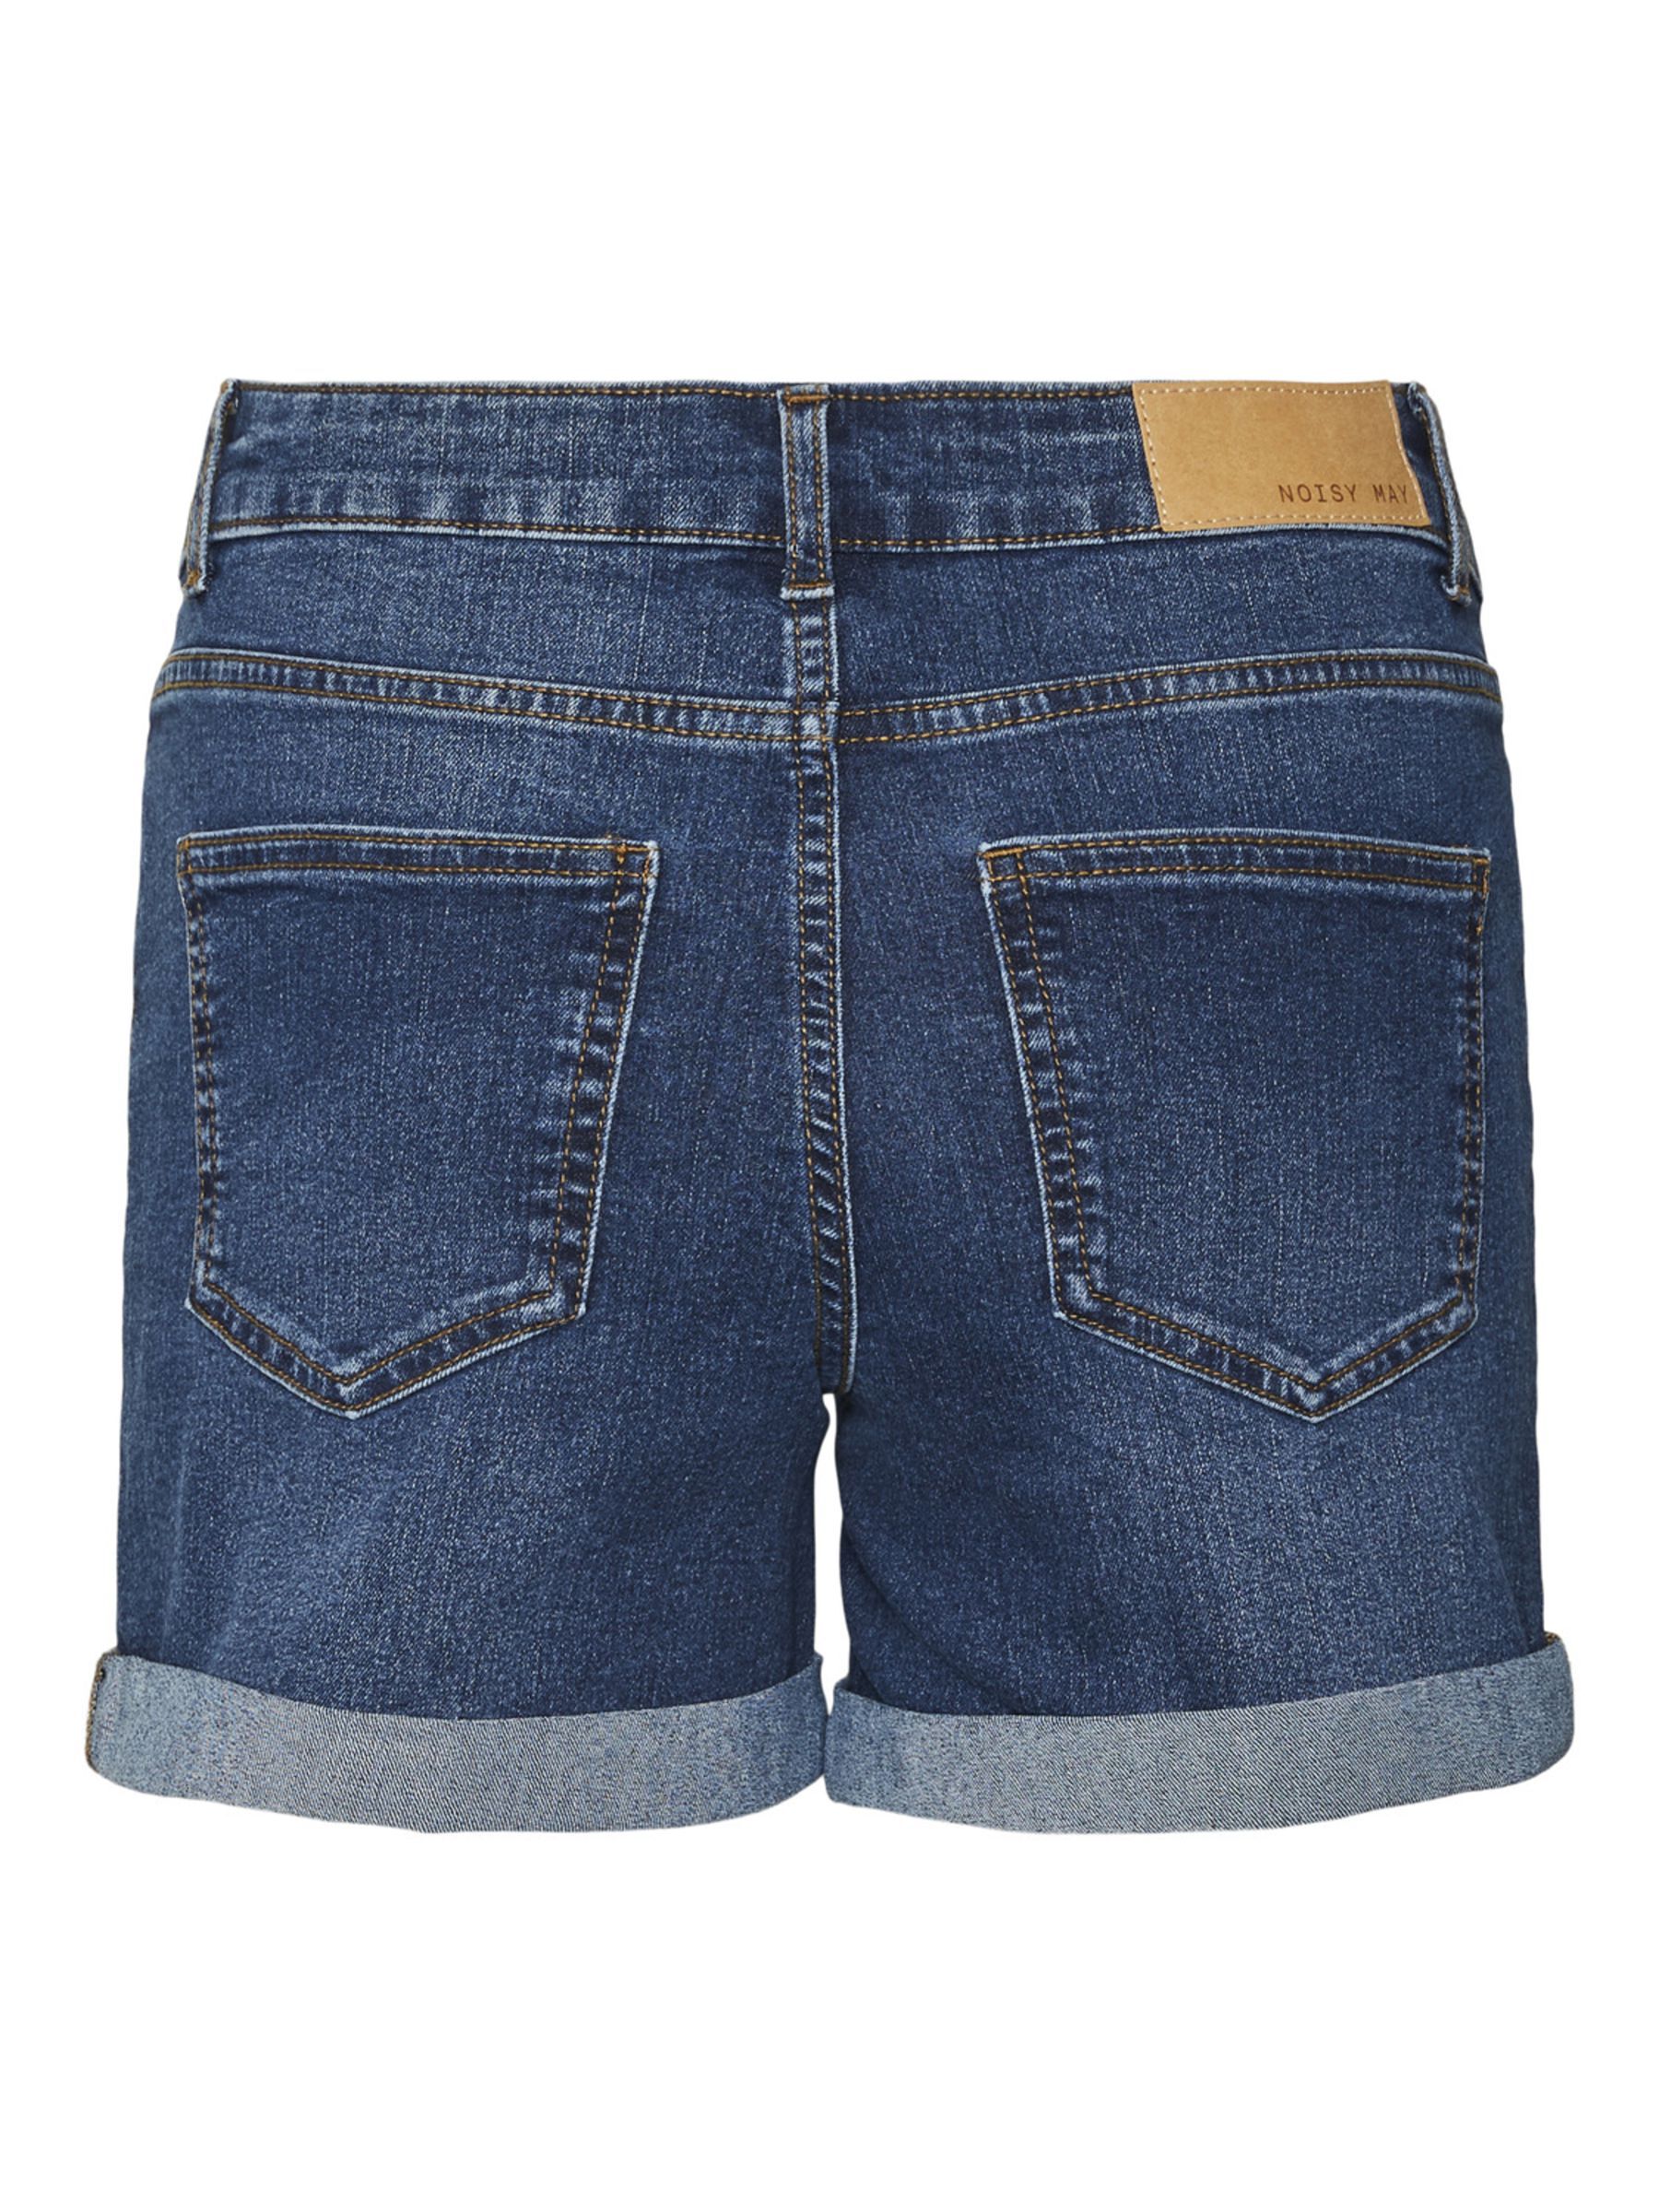 Mode Shorts en jean Pantalons courts Noisy May Short en jean gris clair style d\u00e9contract\u00e9 